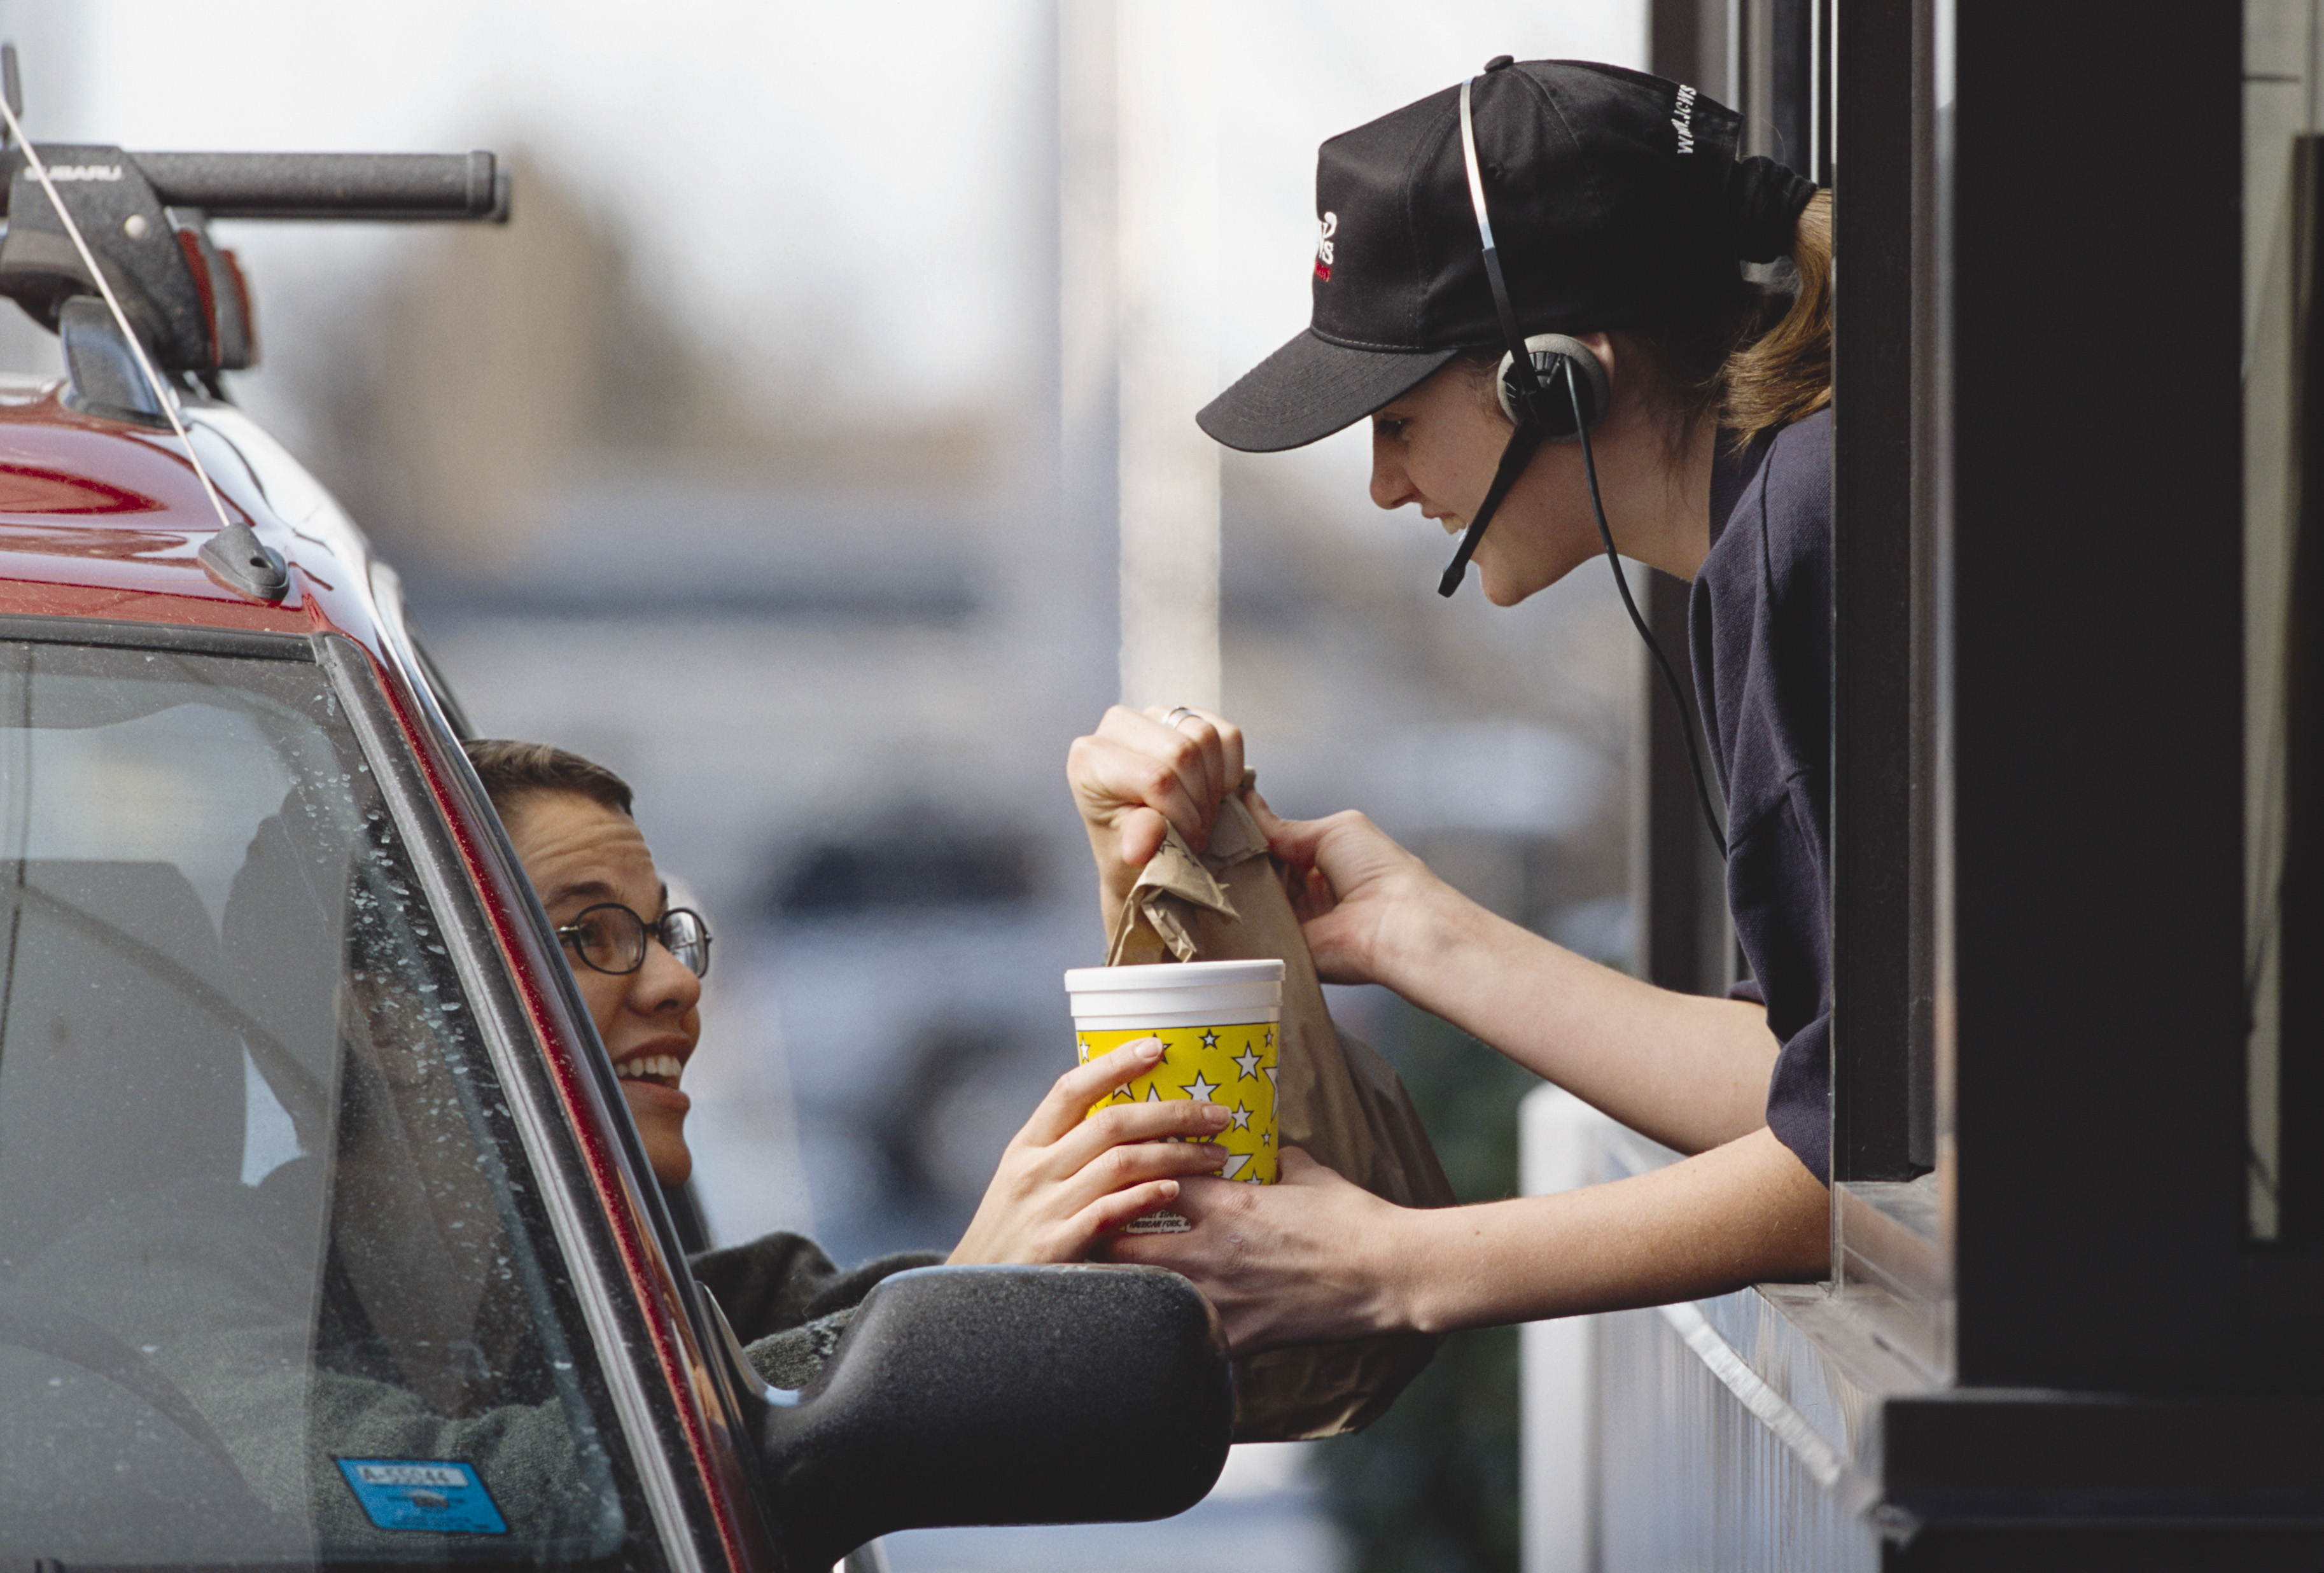 A woman handing a customer their food order at the drive-thru